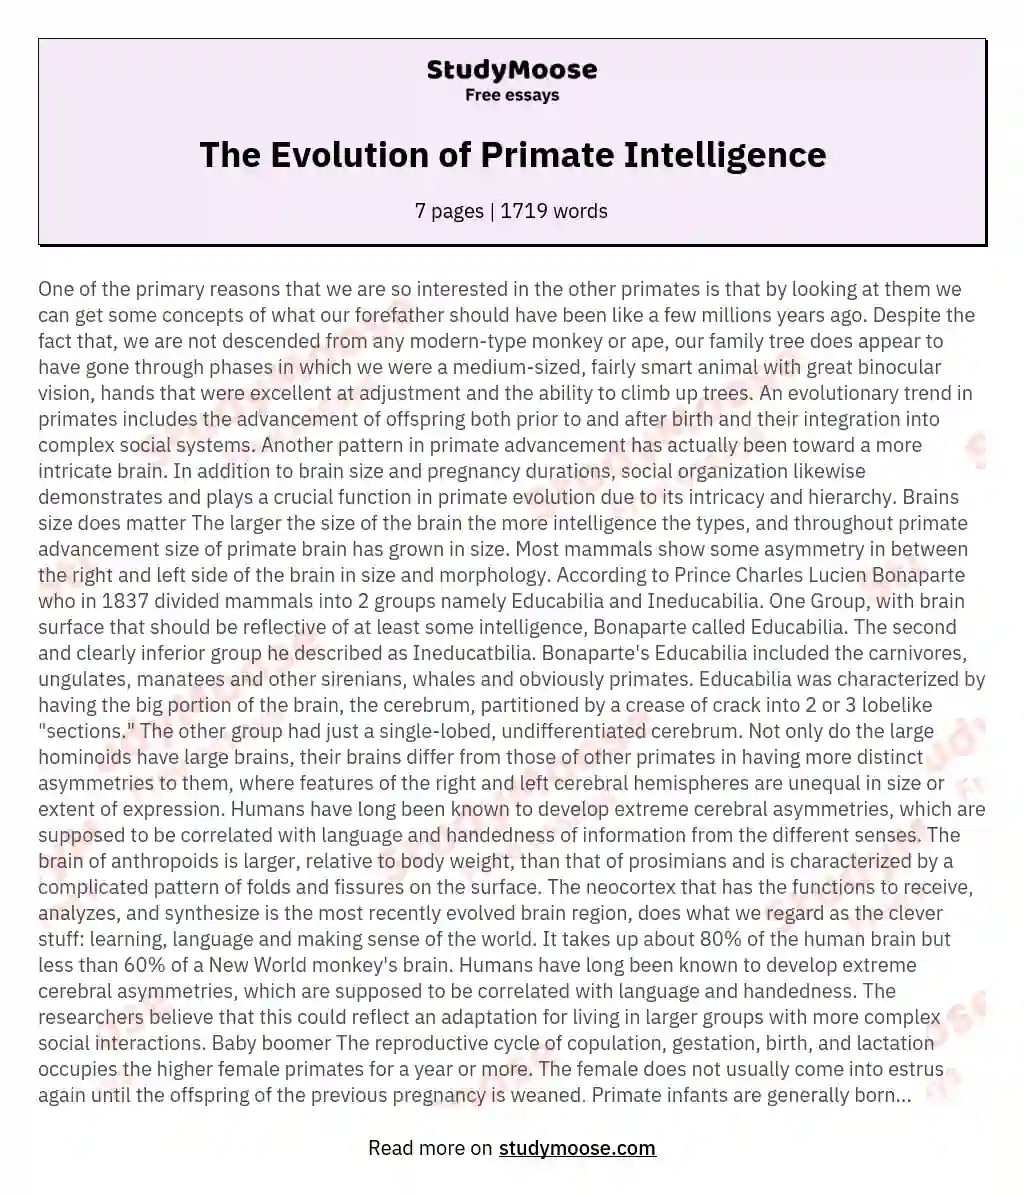 The Evolution of Primate Intelligence essay